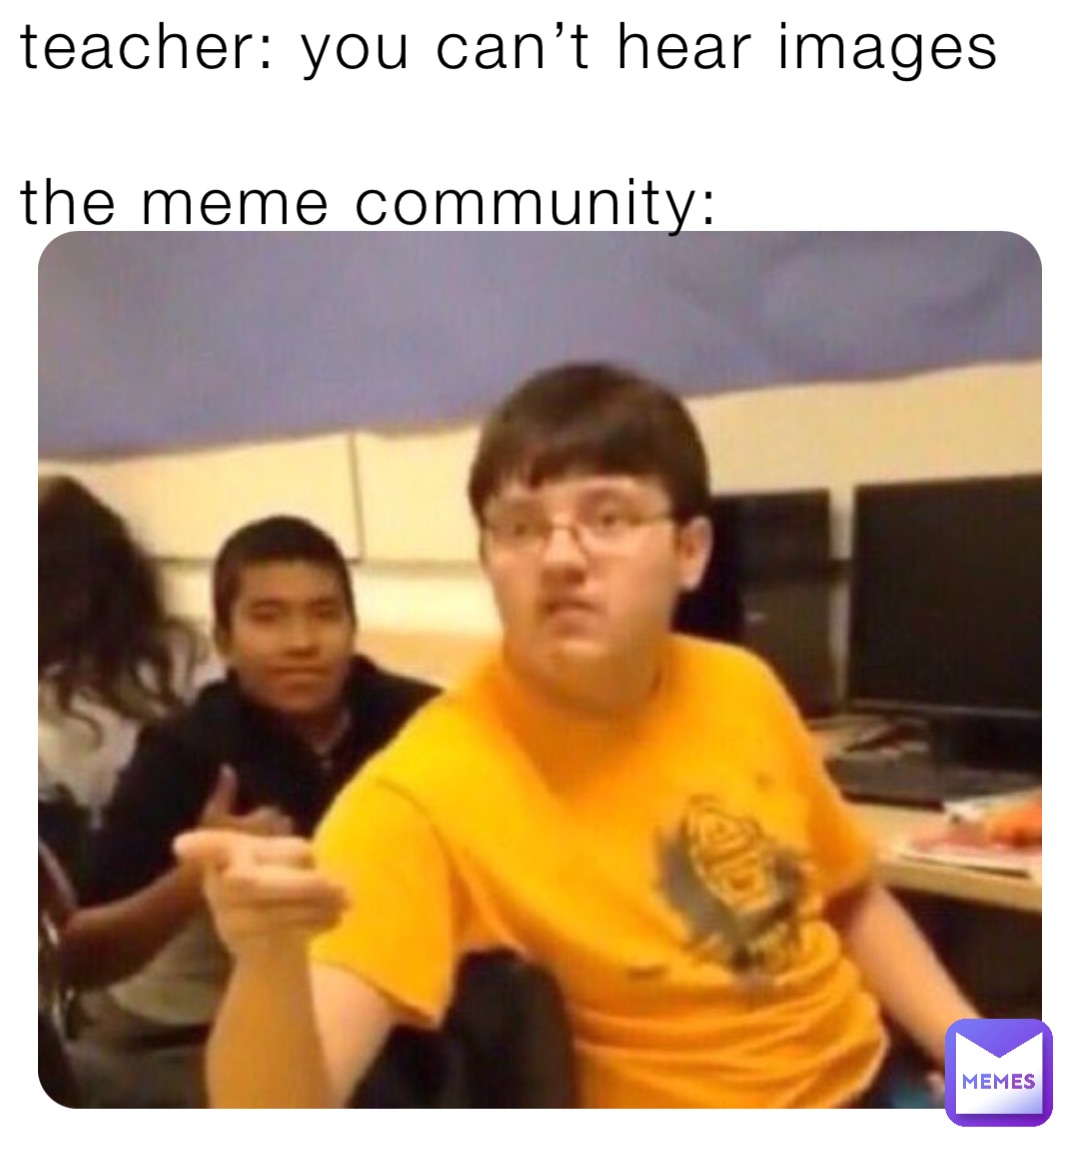 teacher: you can’t hear images

the meme community: Teacher: you can’t hear images

The meme community: